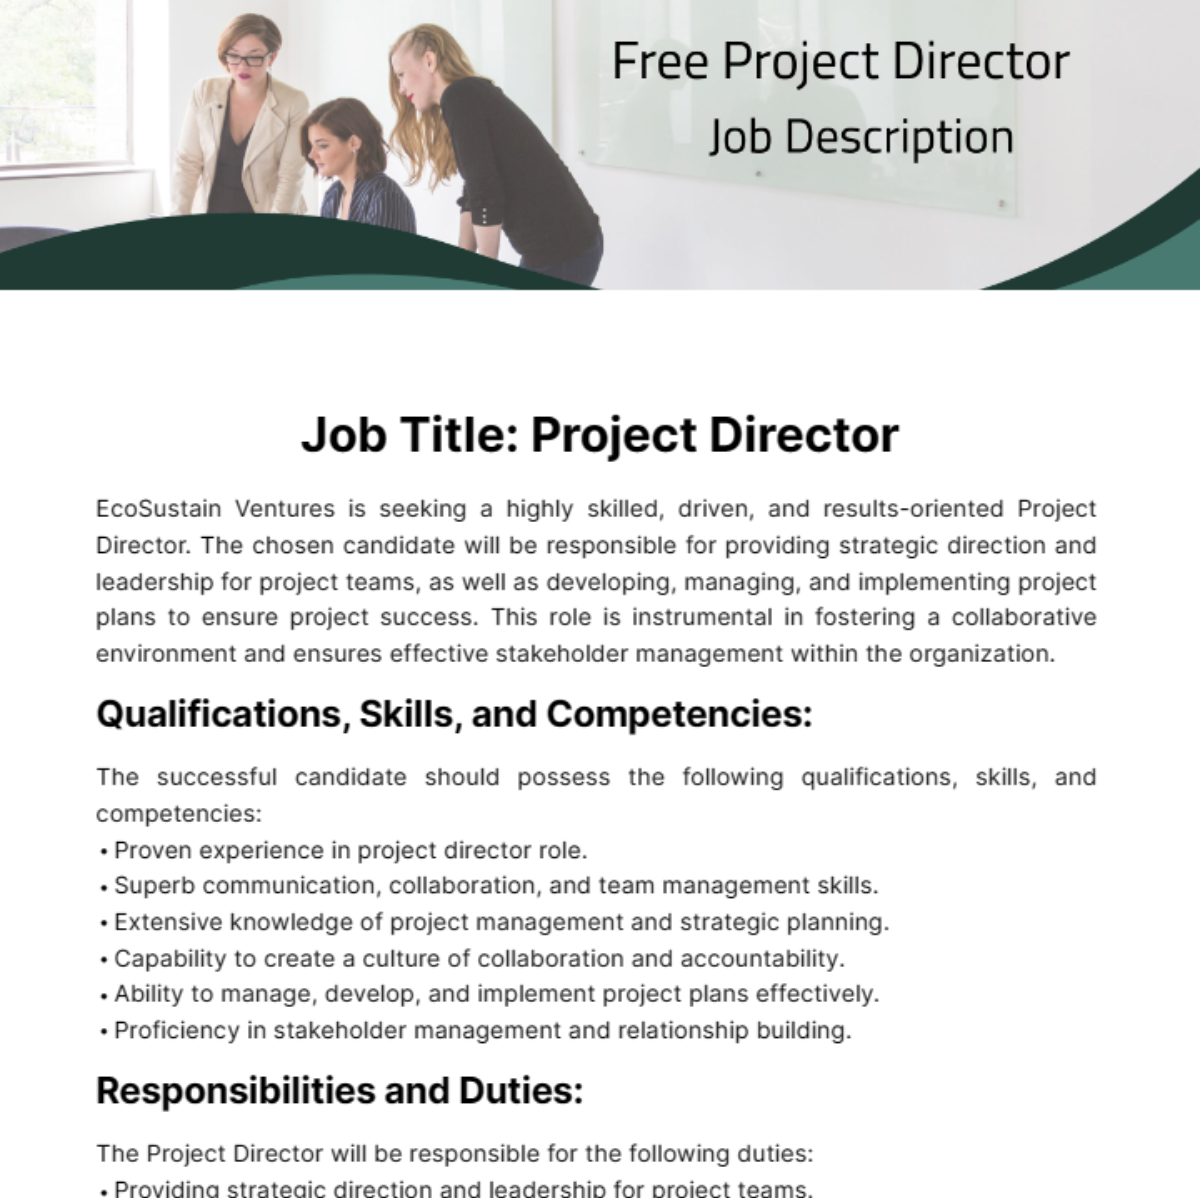 Free Project Director Job Description Template